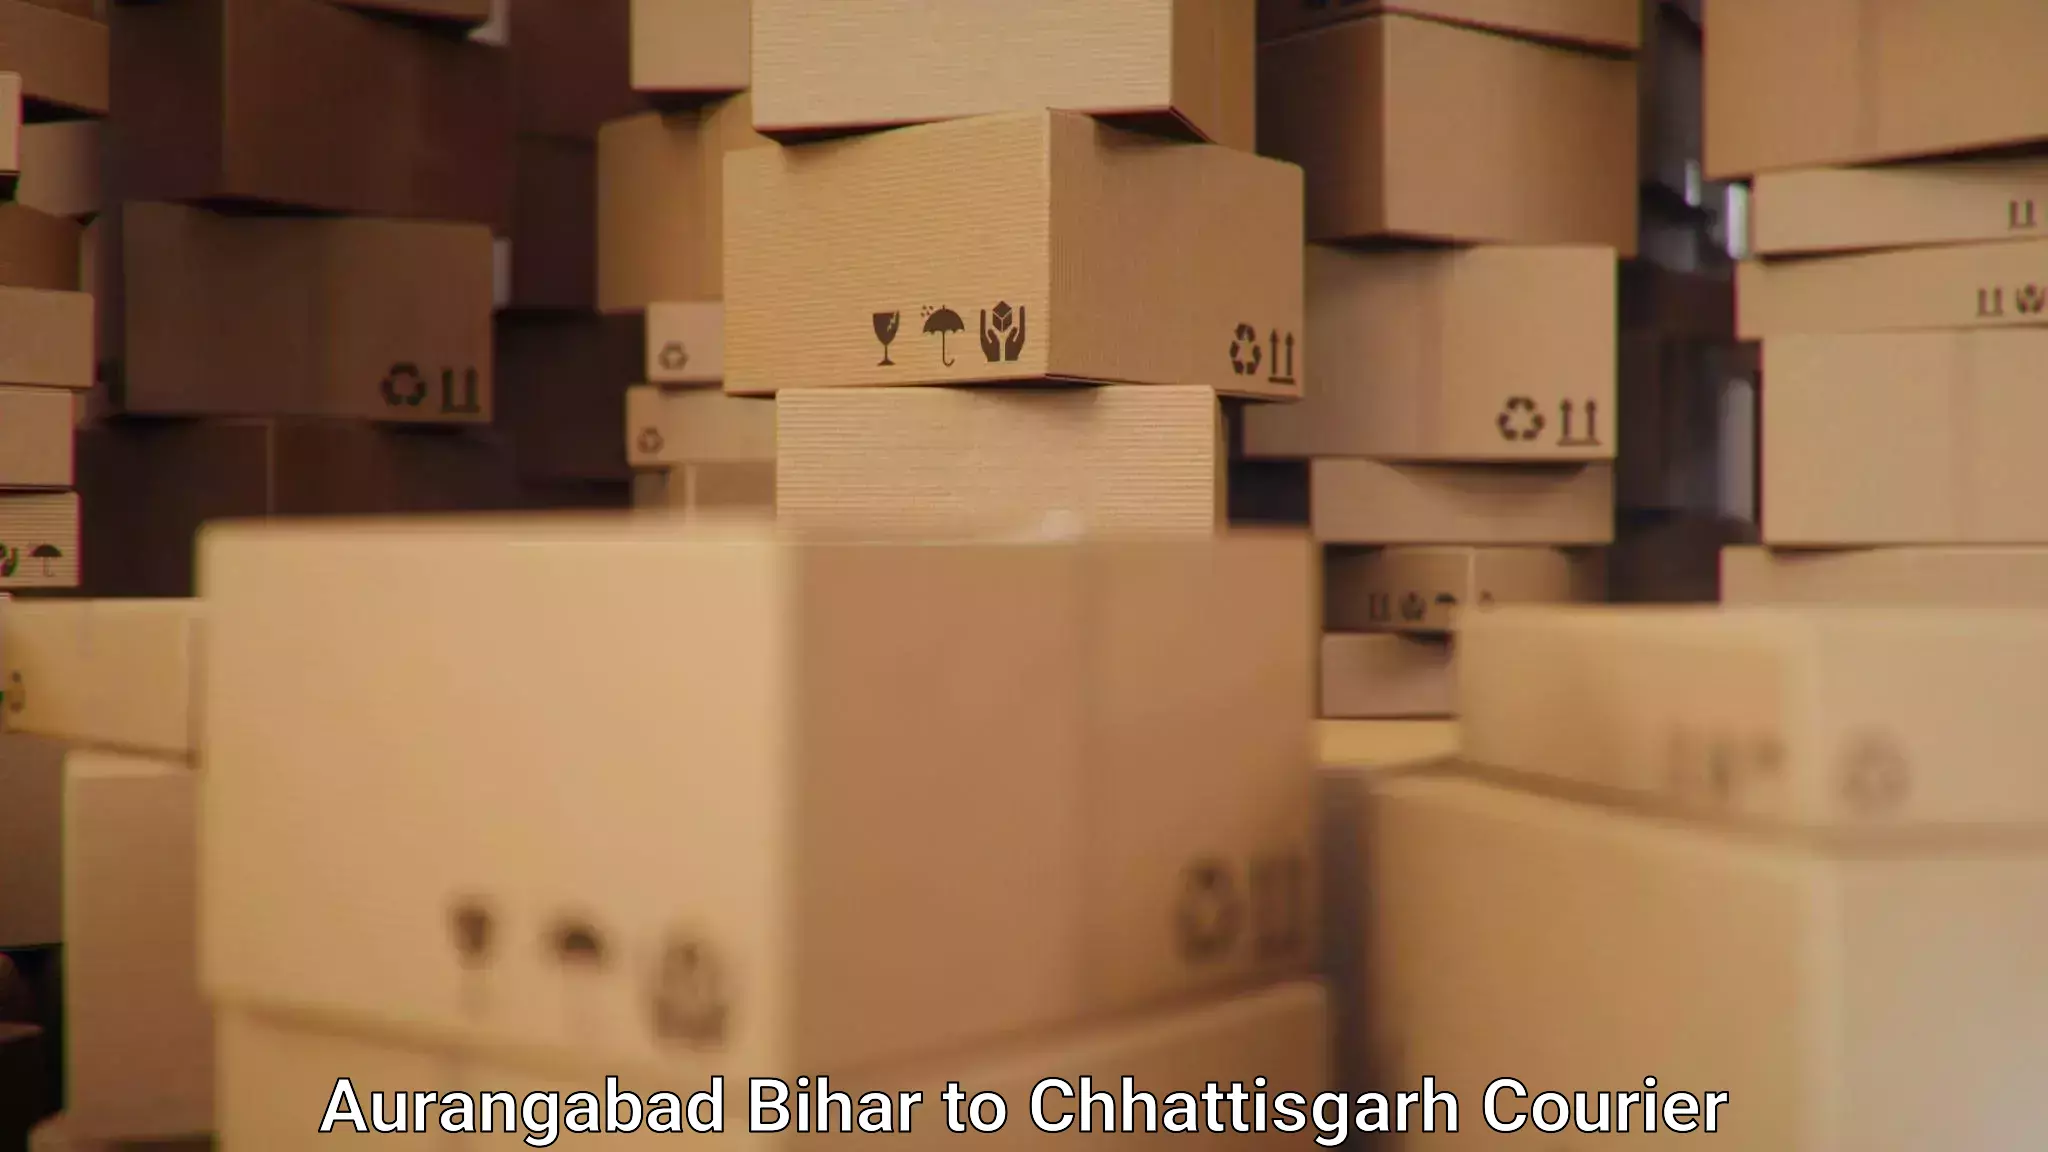 Logistics service provider Aurangabad Bihar to Jaijaipur